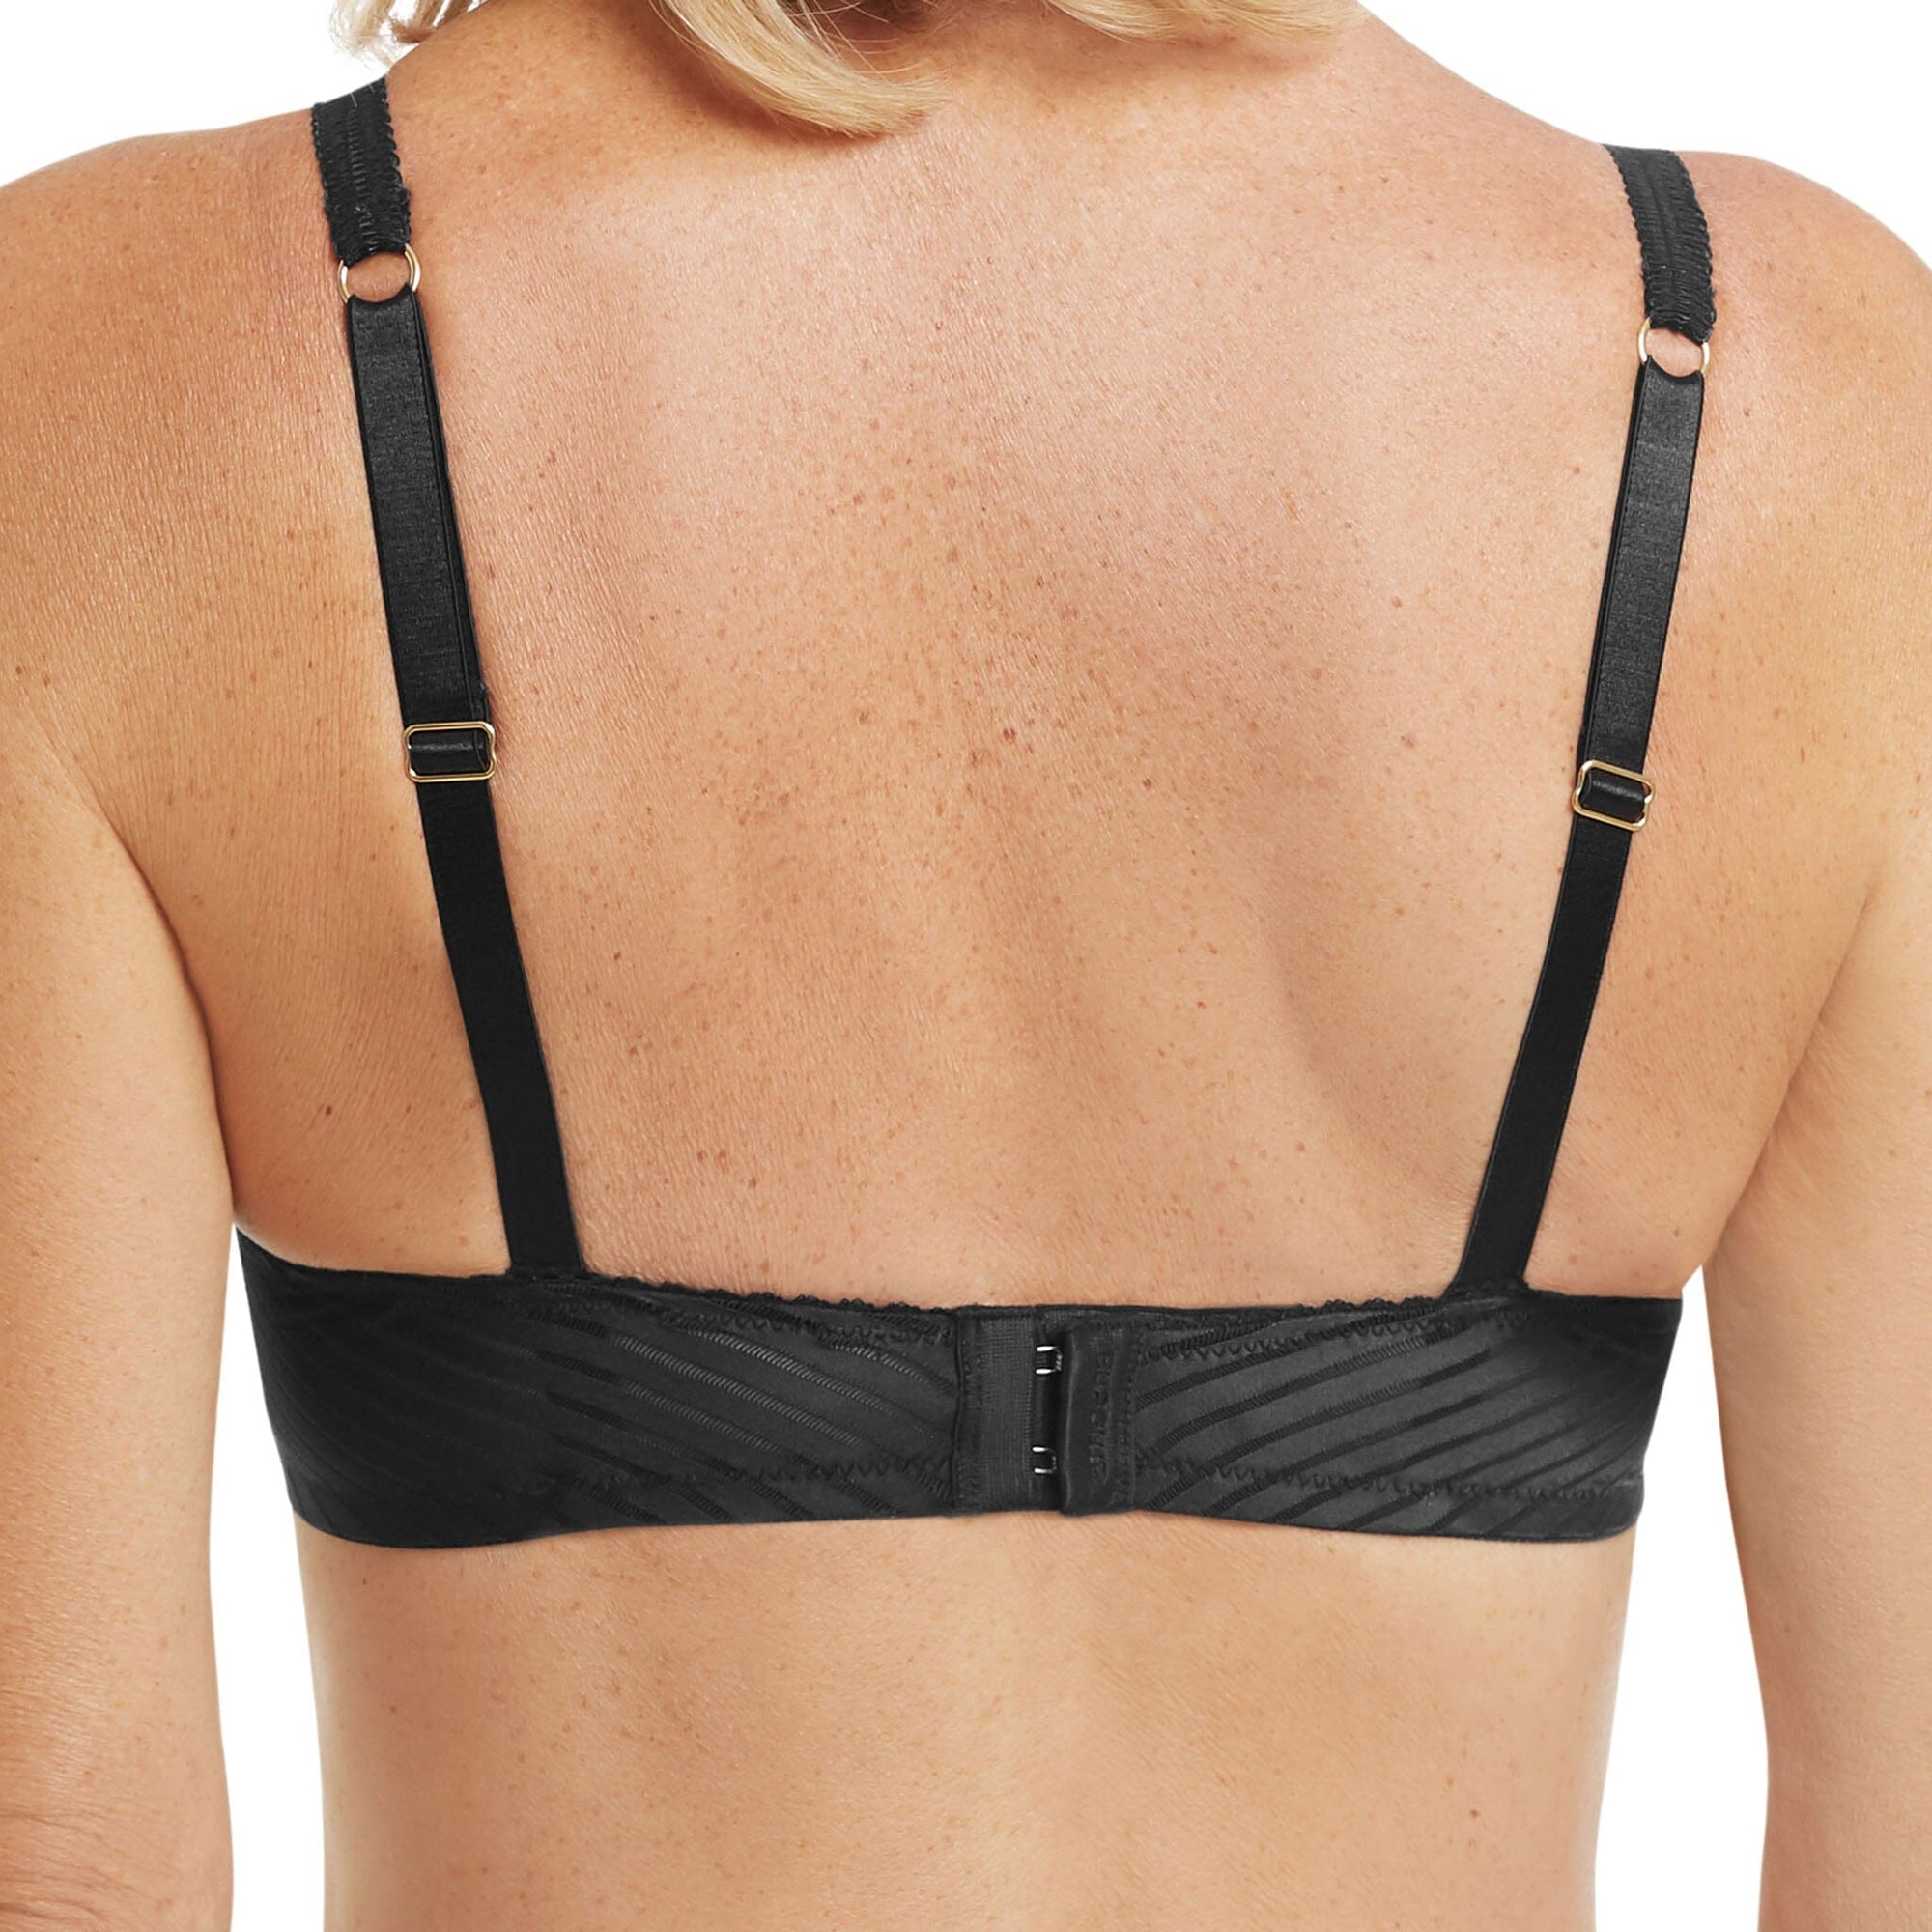 Amoena® Karolina Wire-Free Bra Shown in Black/Nude-Back View